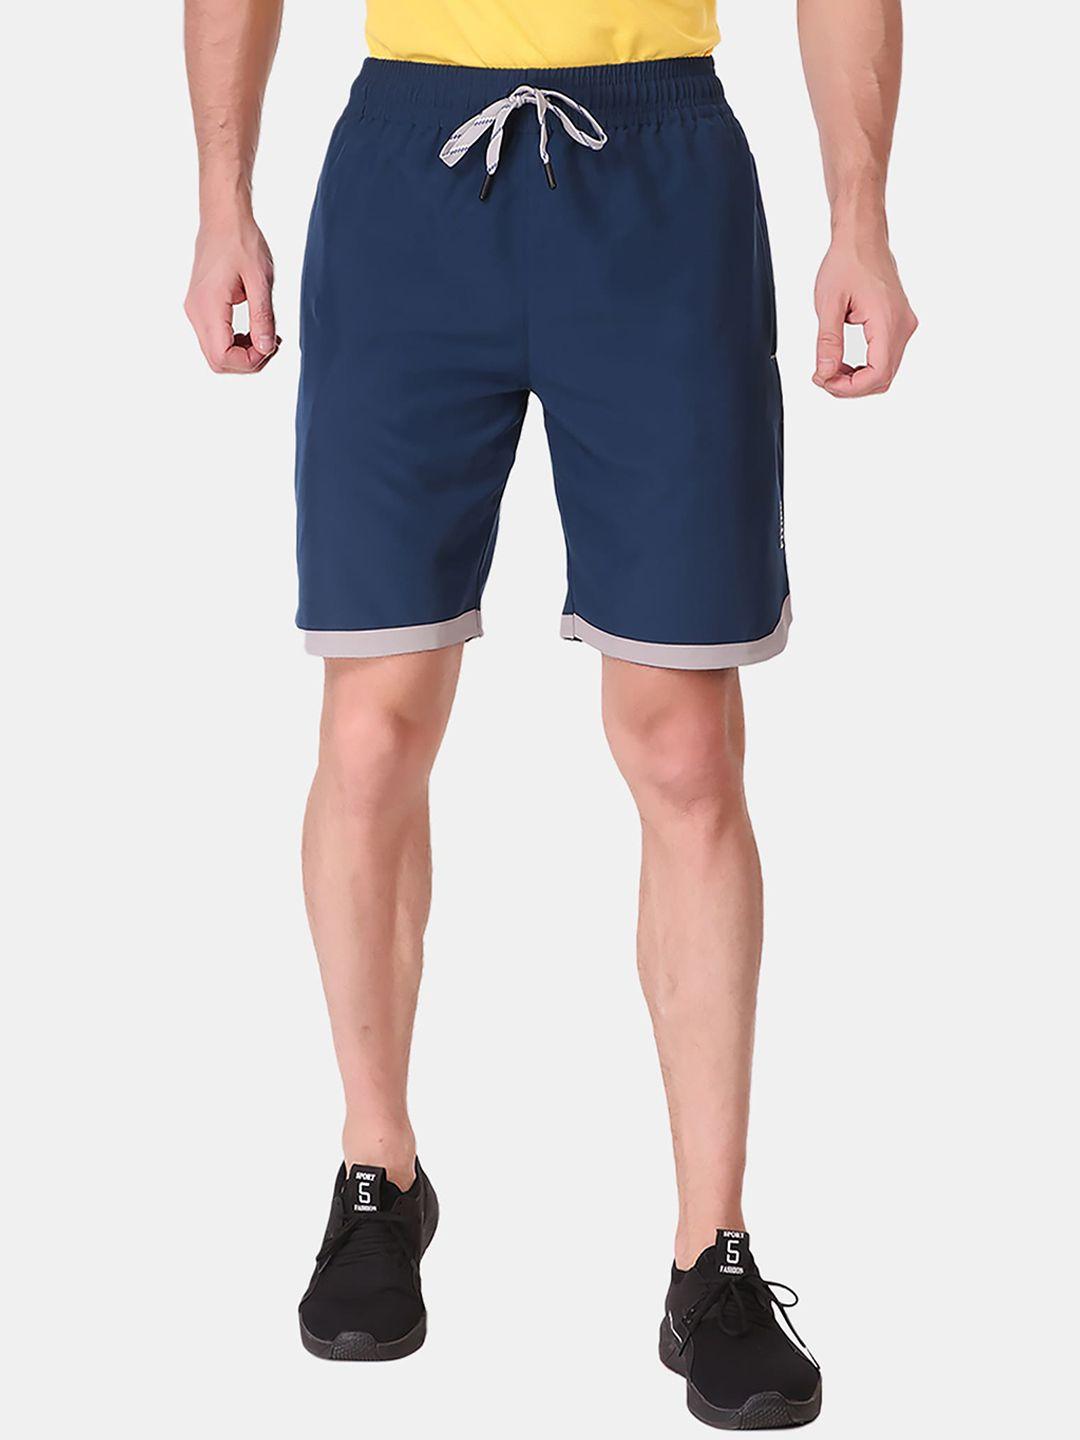 fitinc men blue rapid-dry running sports shorts